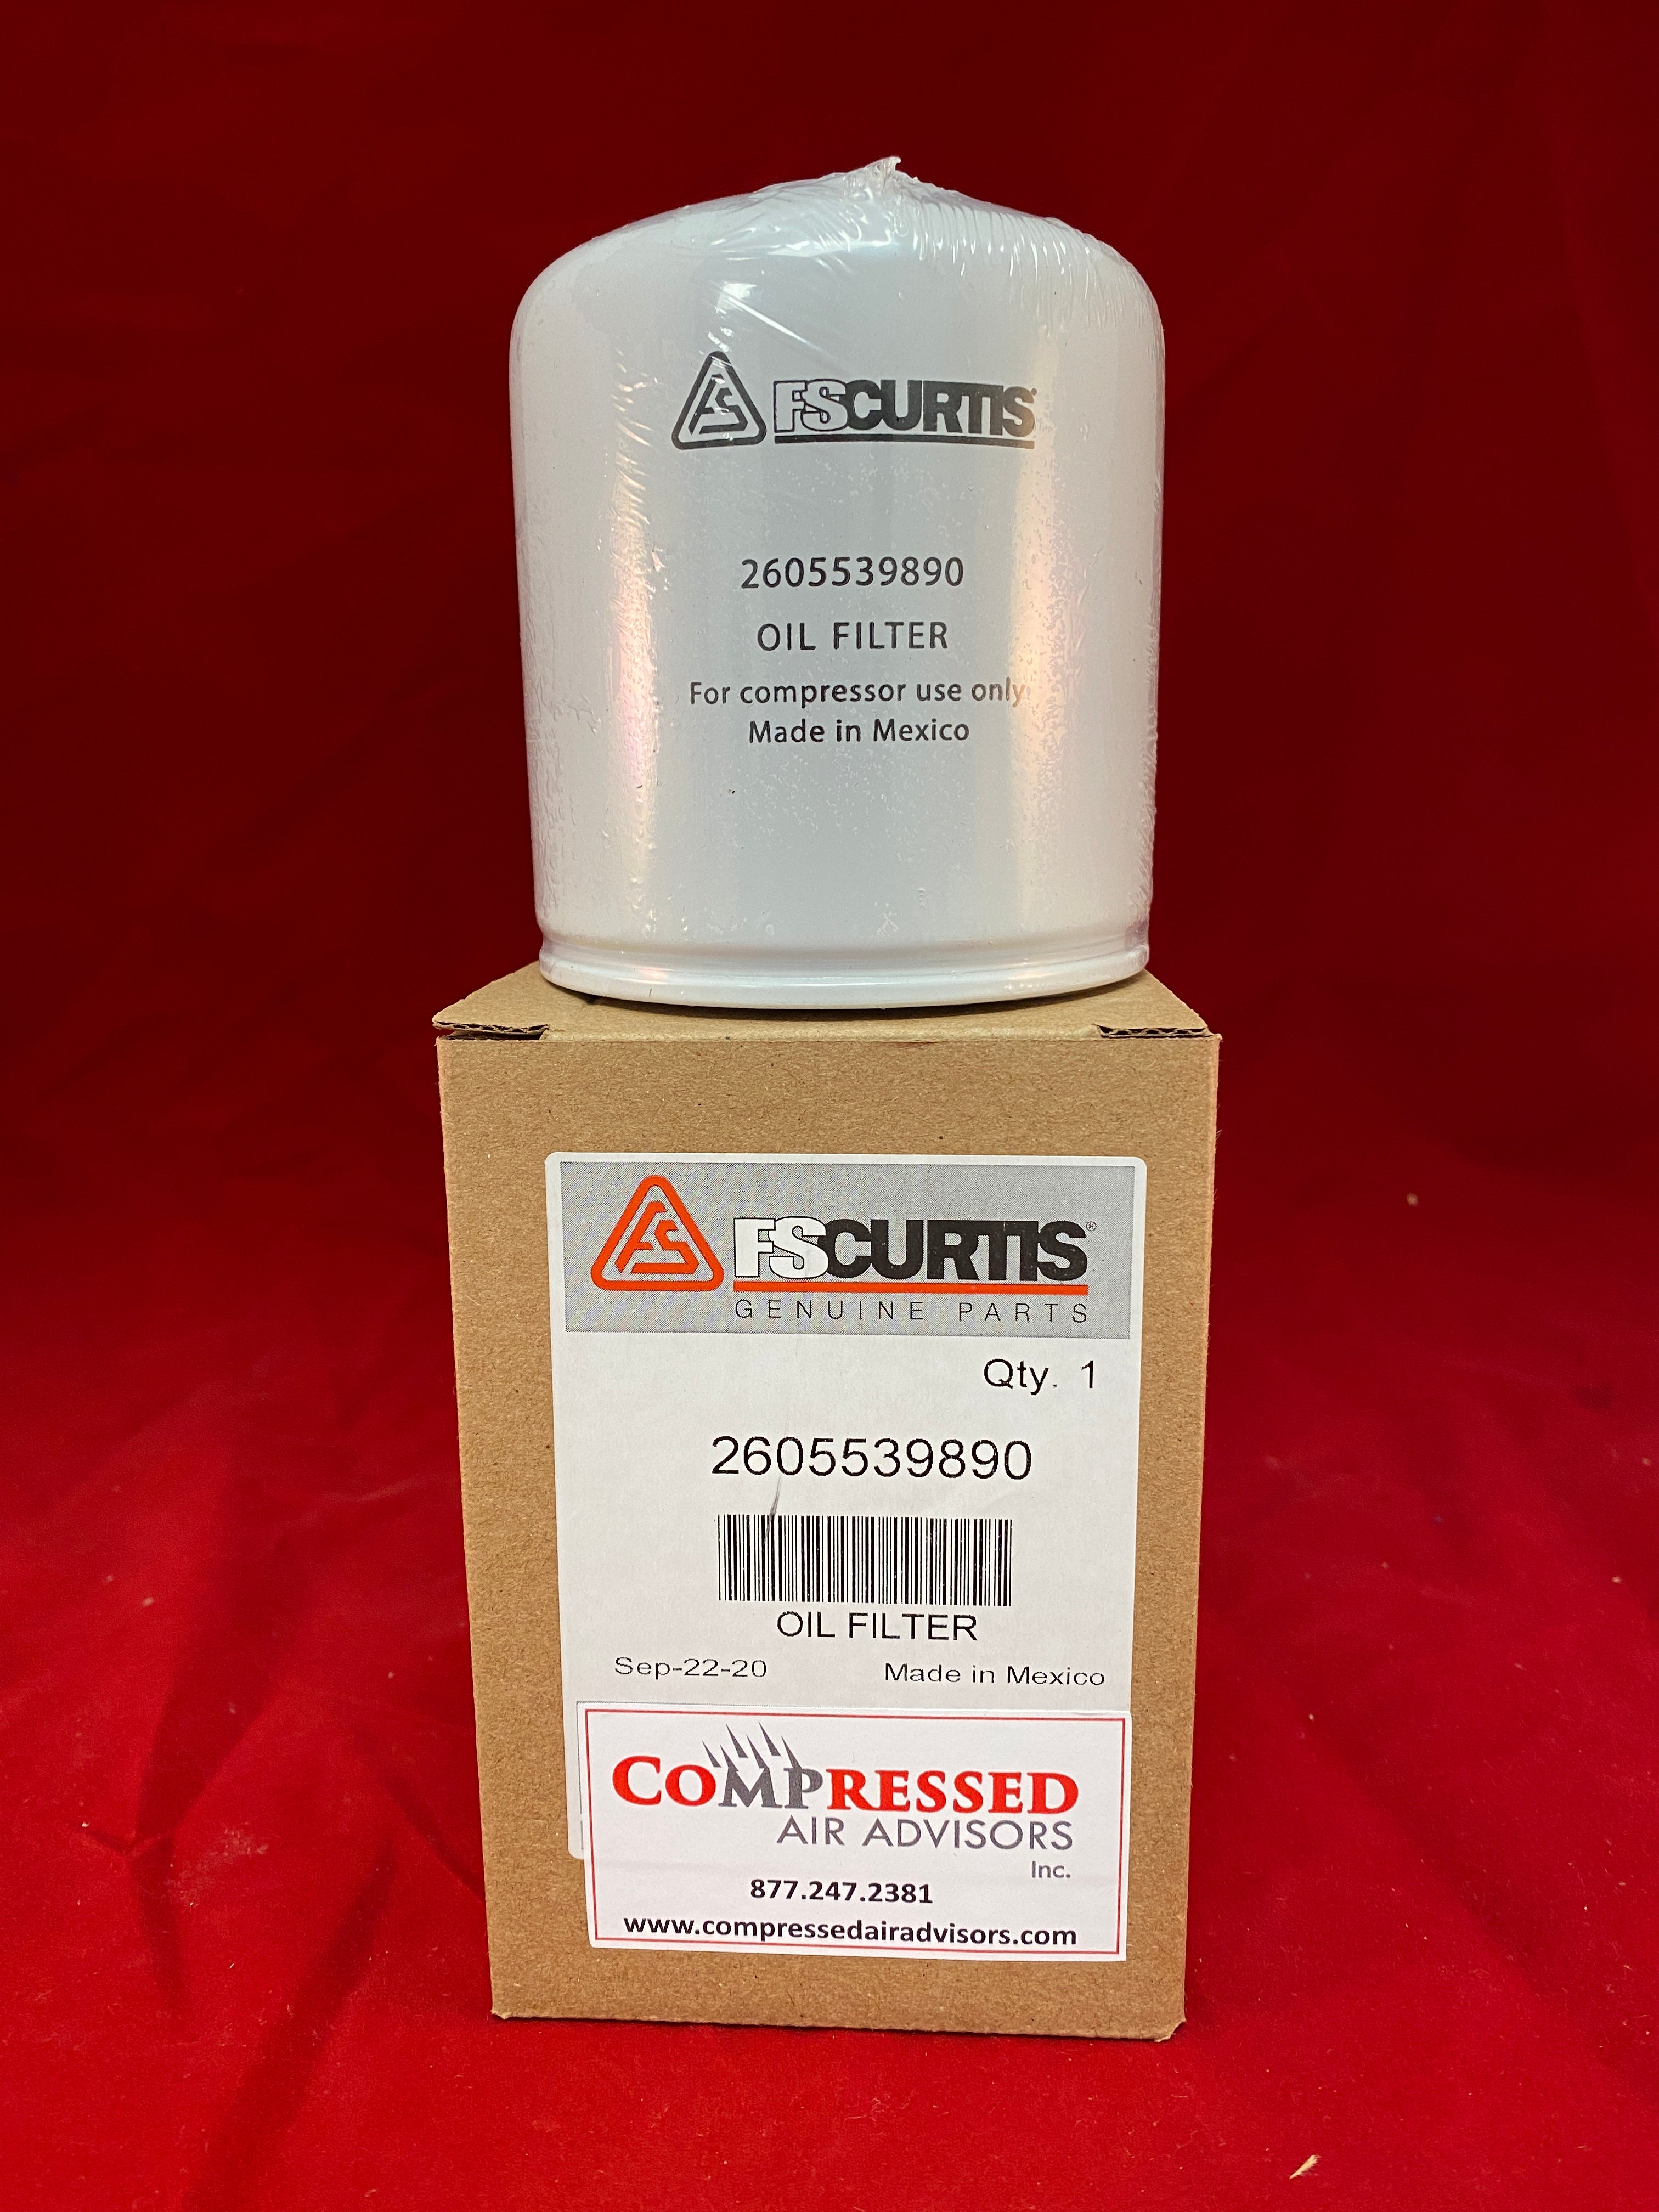 FS Curtis Nx 4-15 - Oil Filter, PN: 2605539890